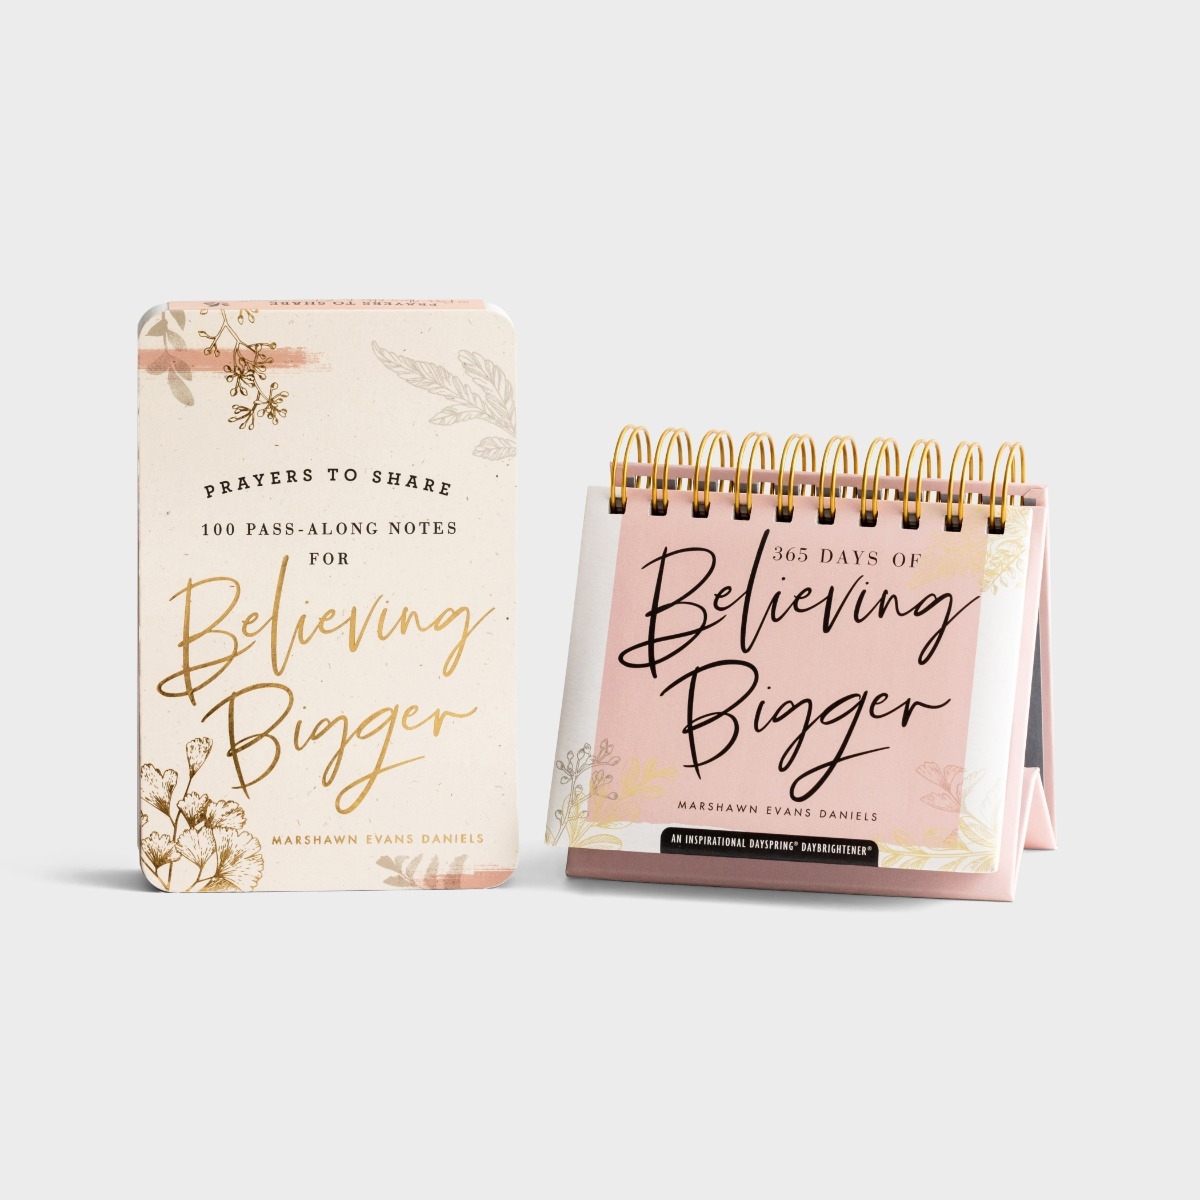 Marshawn Evans Daniels - Notes to Share & Flip Calendar - Gift Set